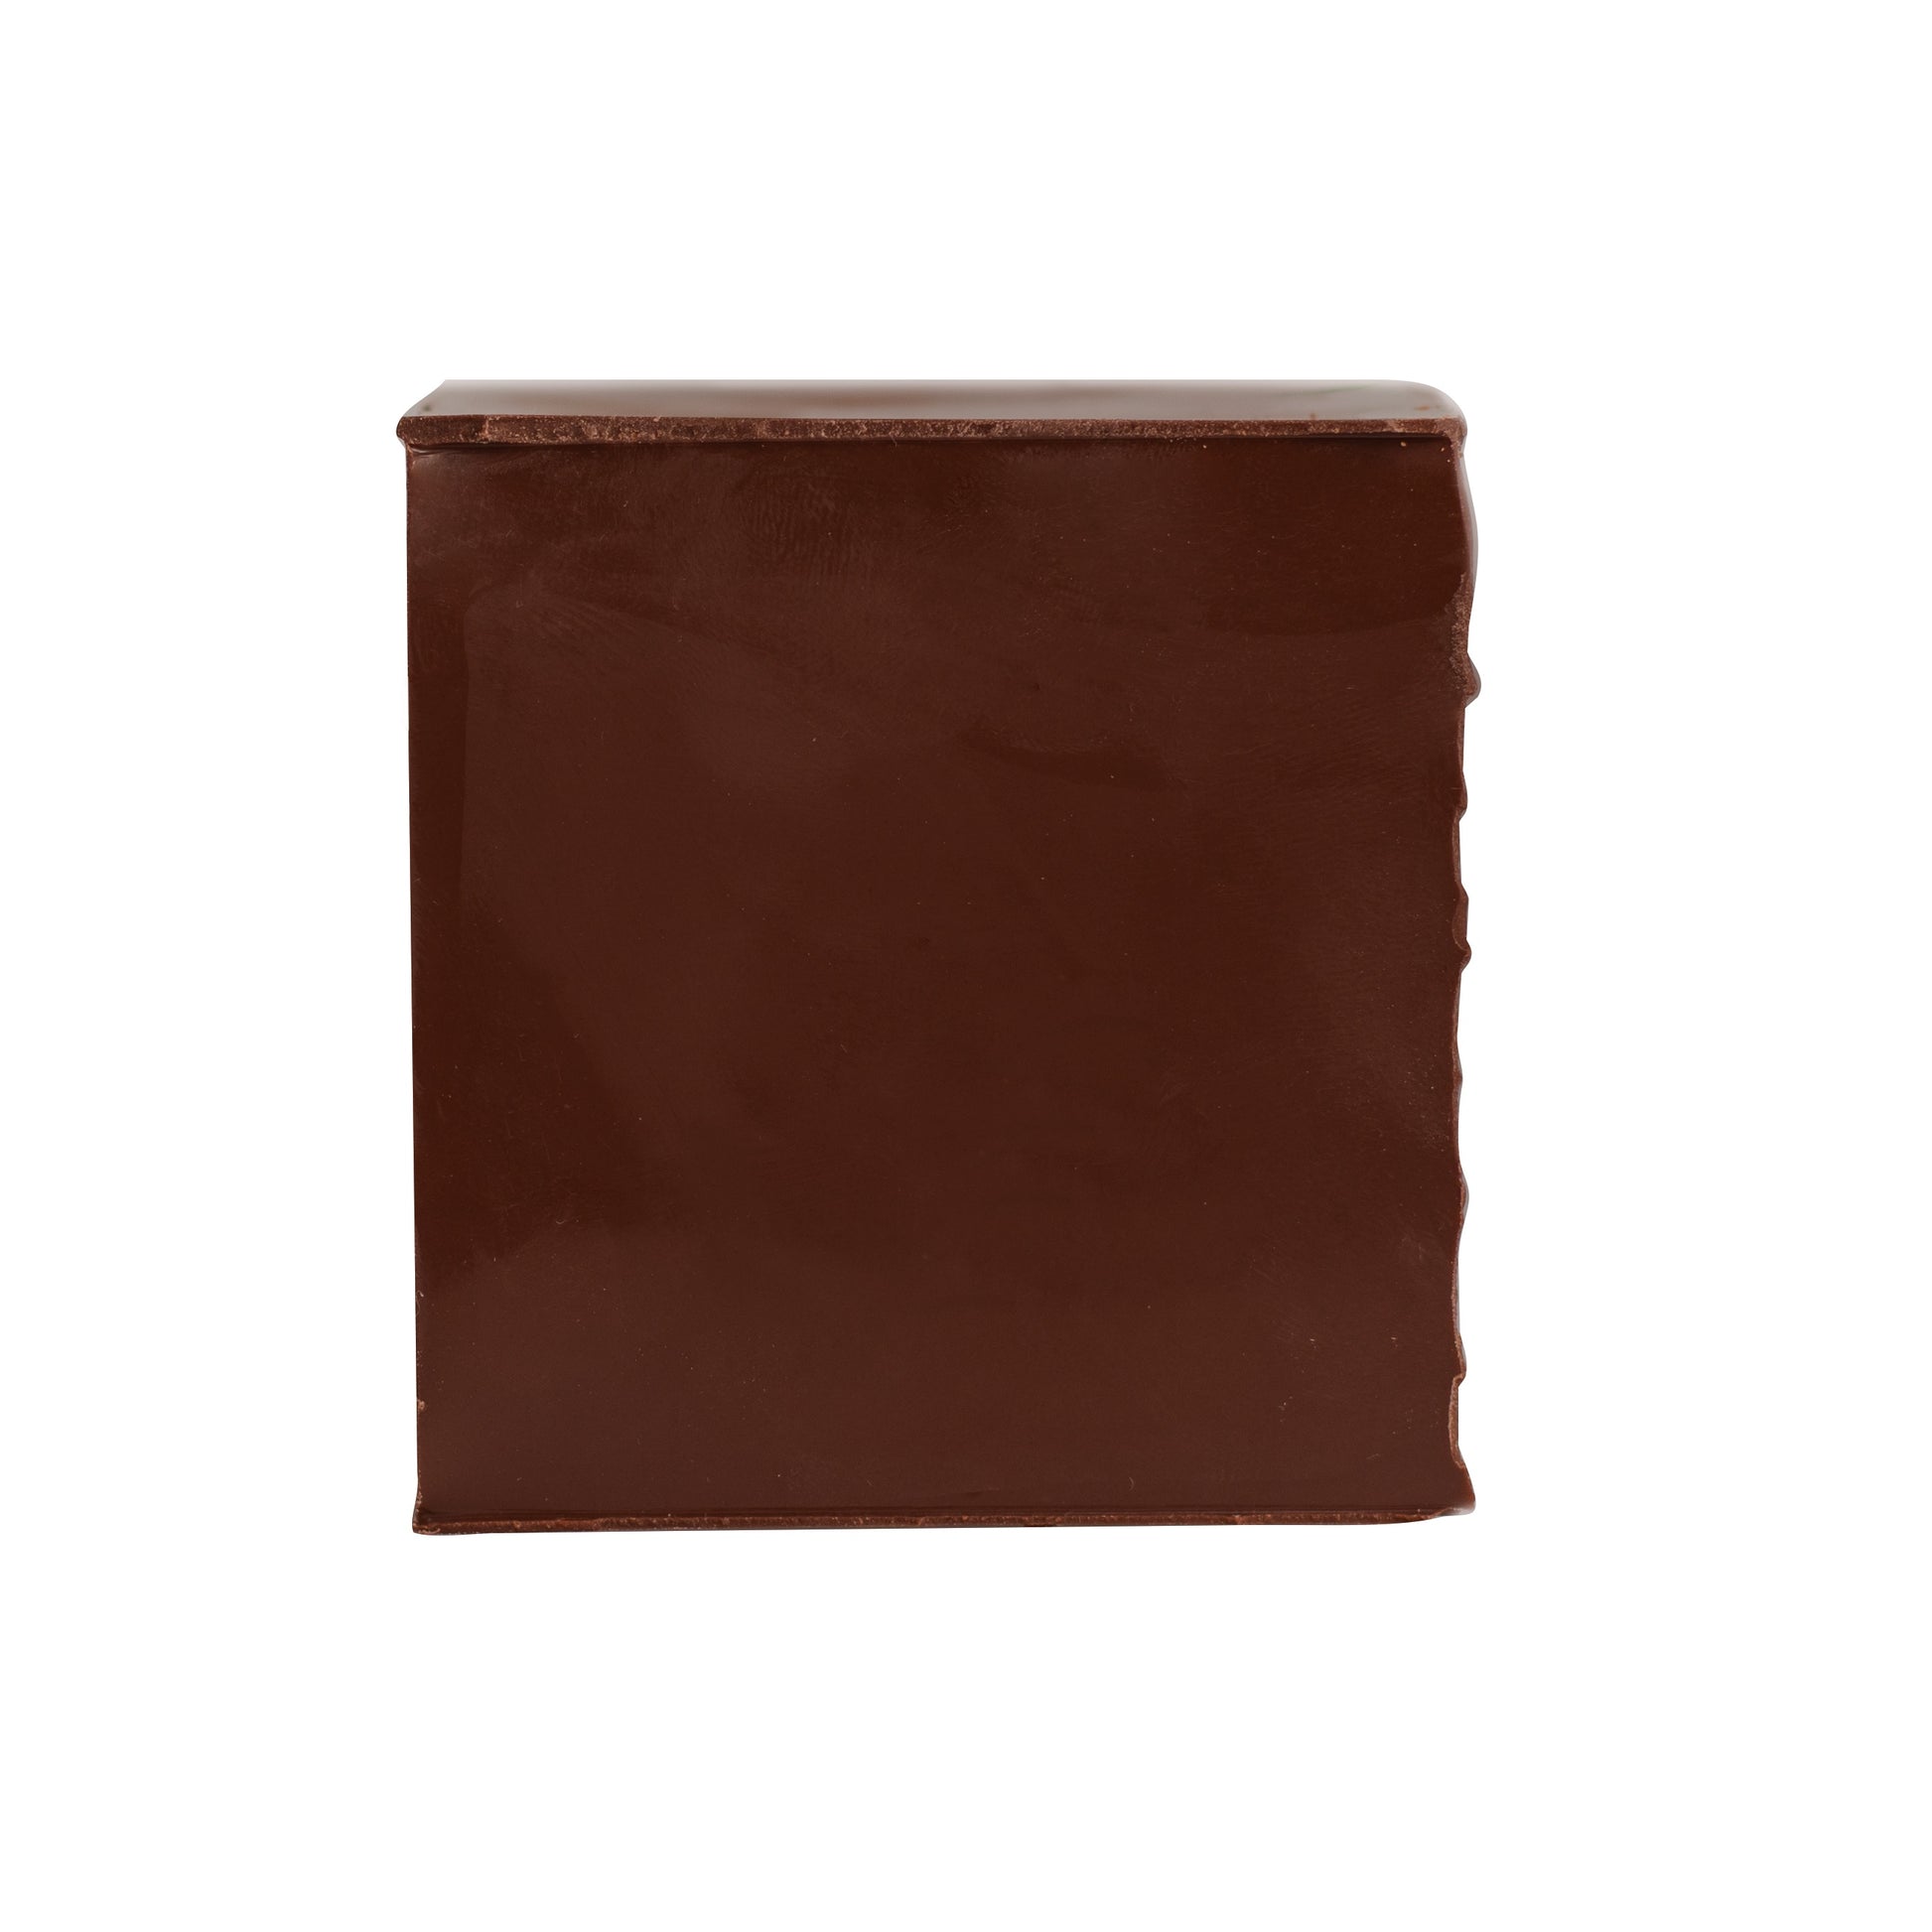 American Crafts Kaboom Brown Chocolate Pinata Heart Mold Kit 